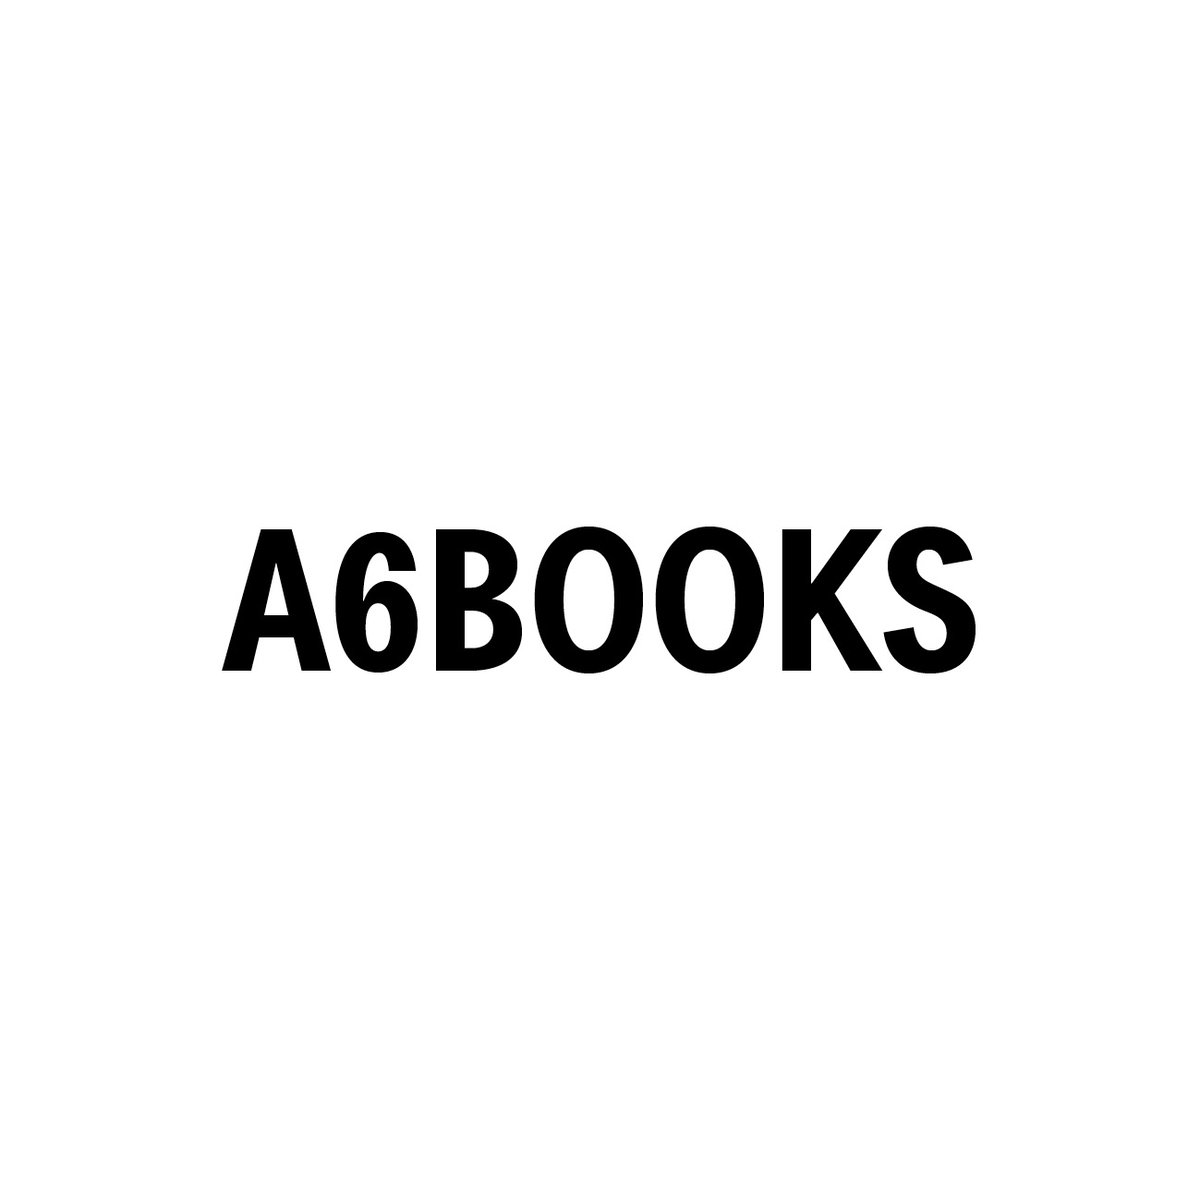 (c) A6books.org